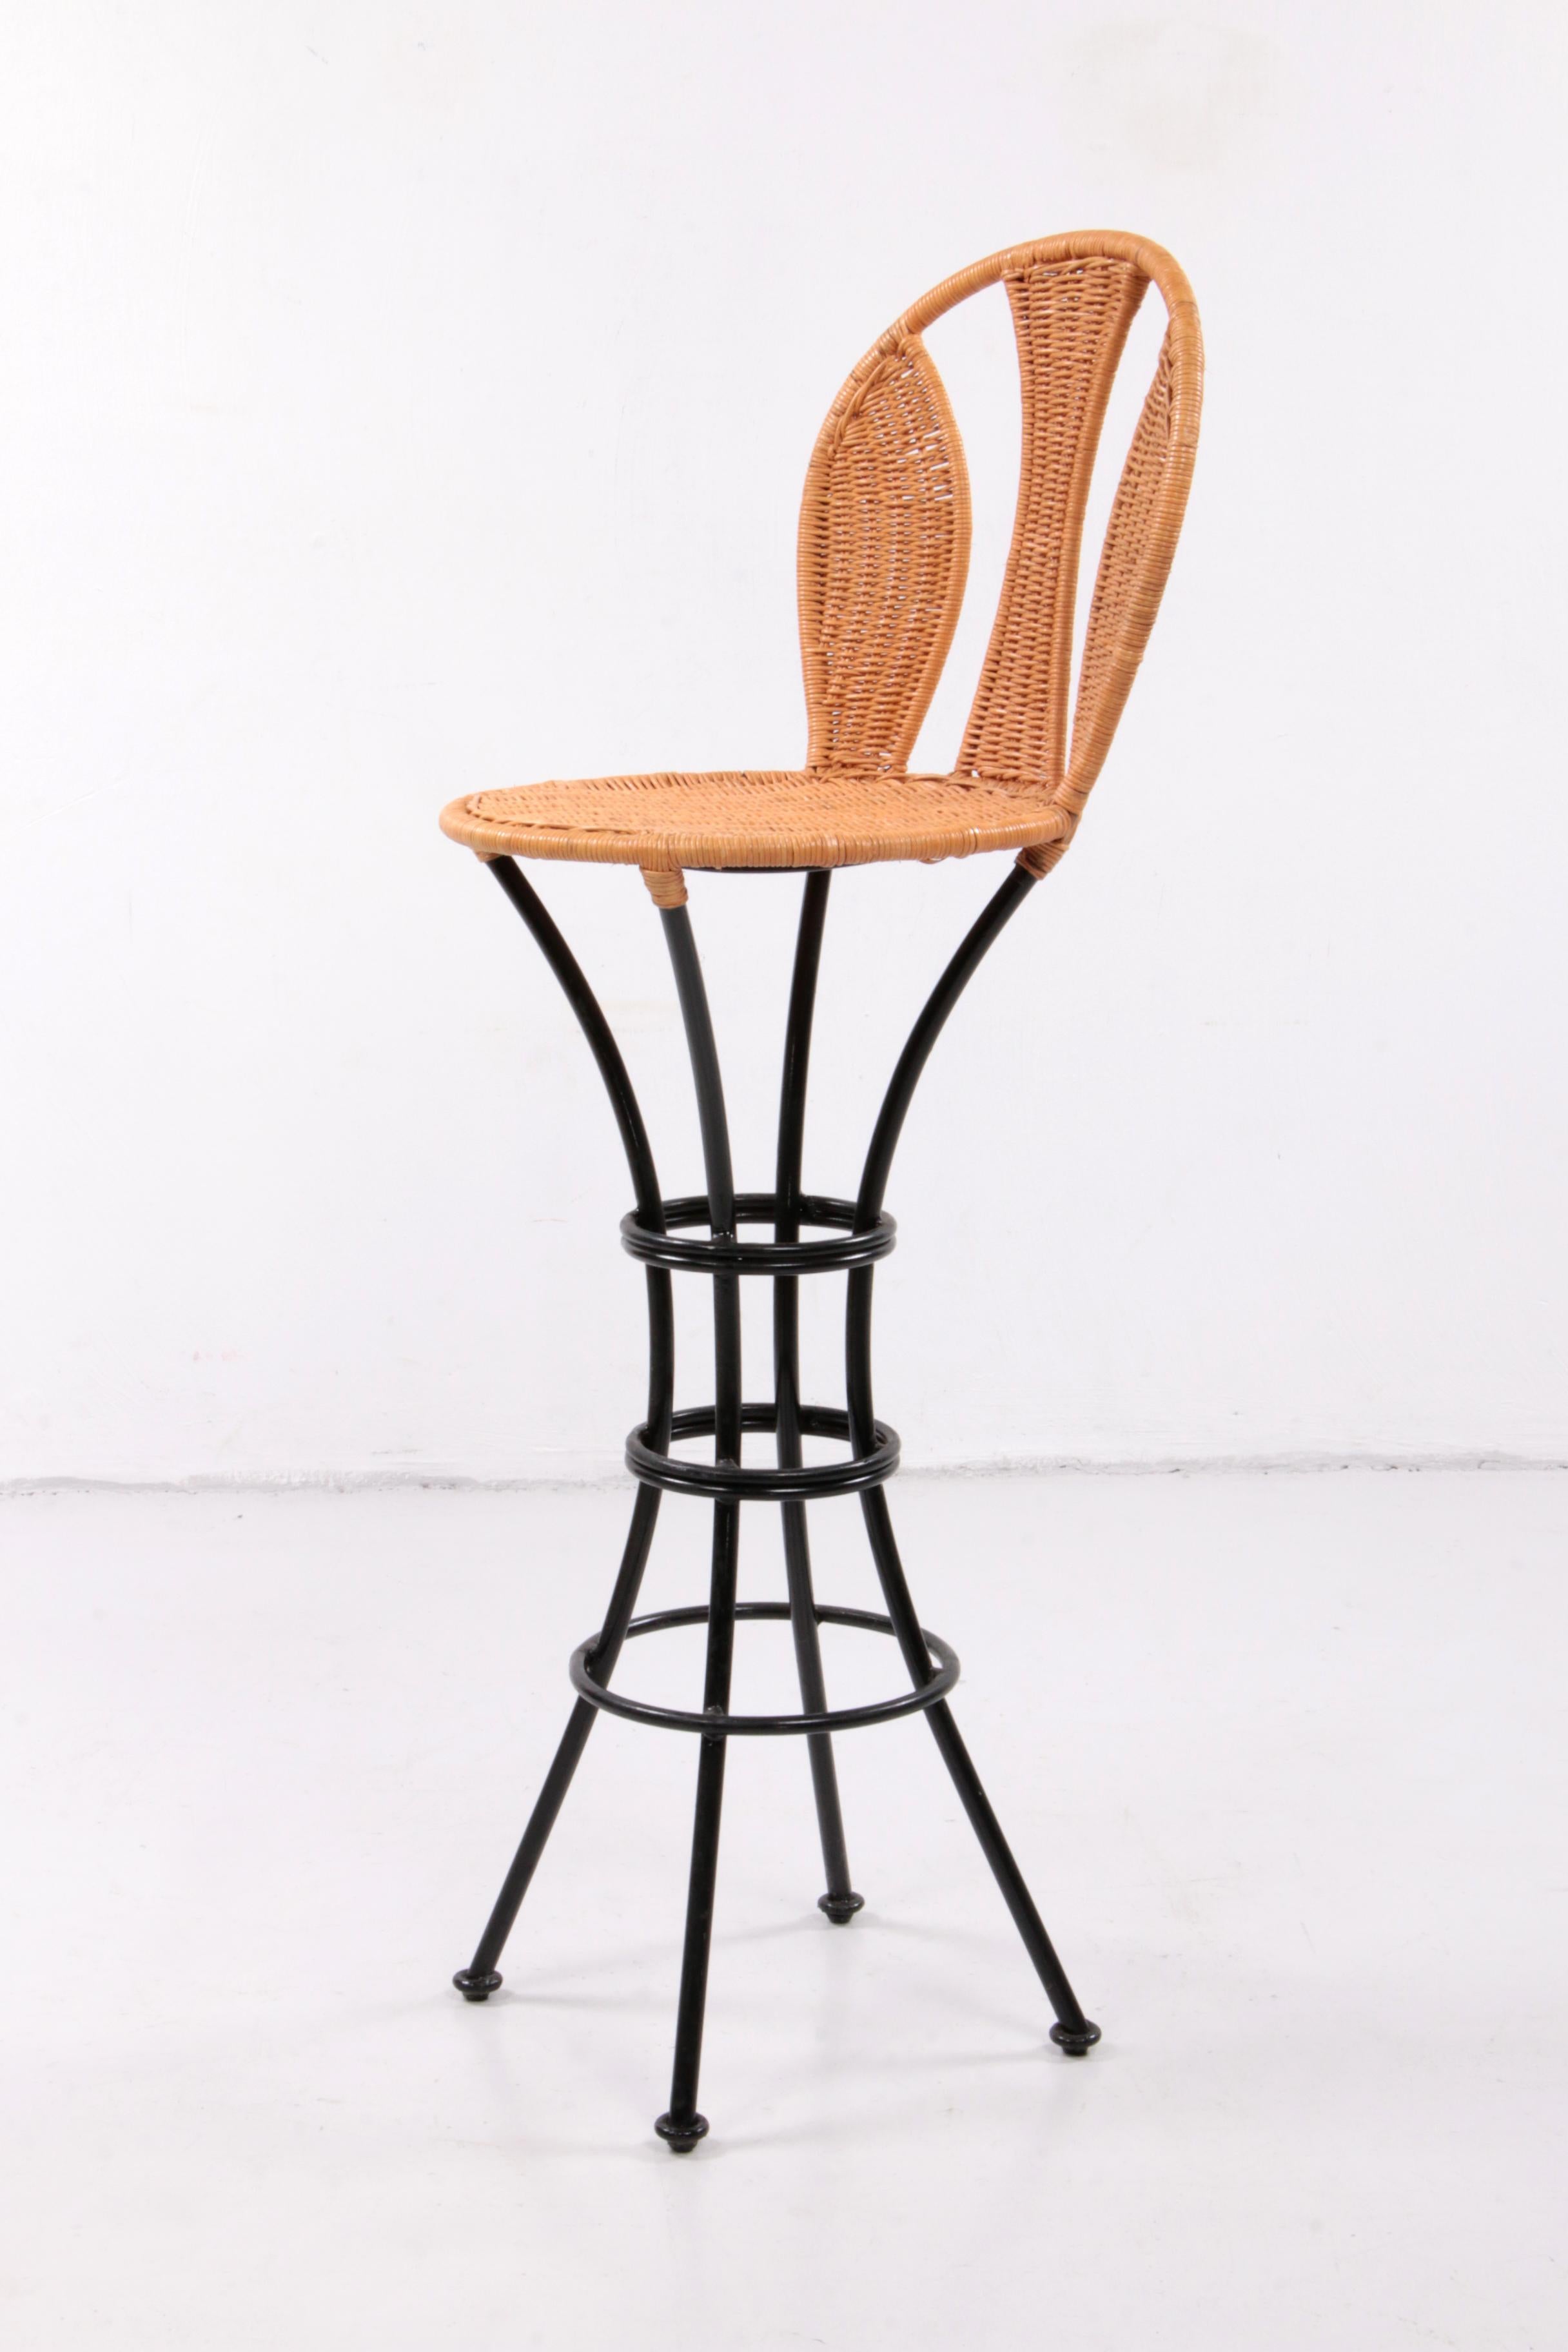 Set of 4 Italian bar stools from the 1970s. 1